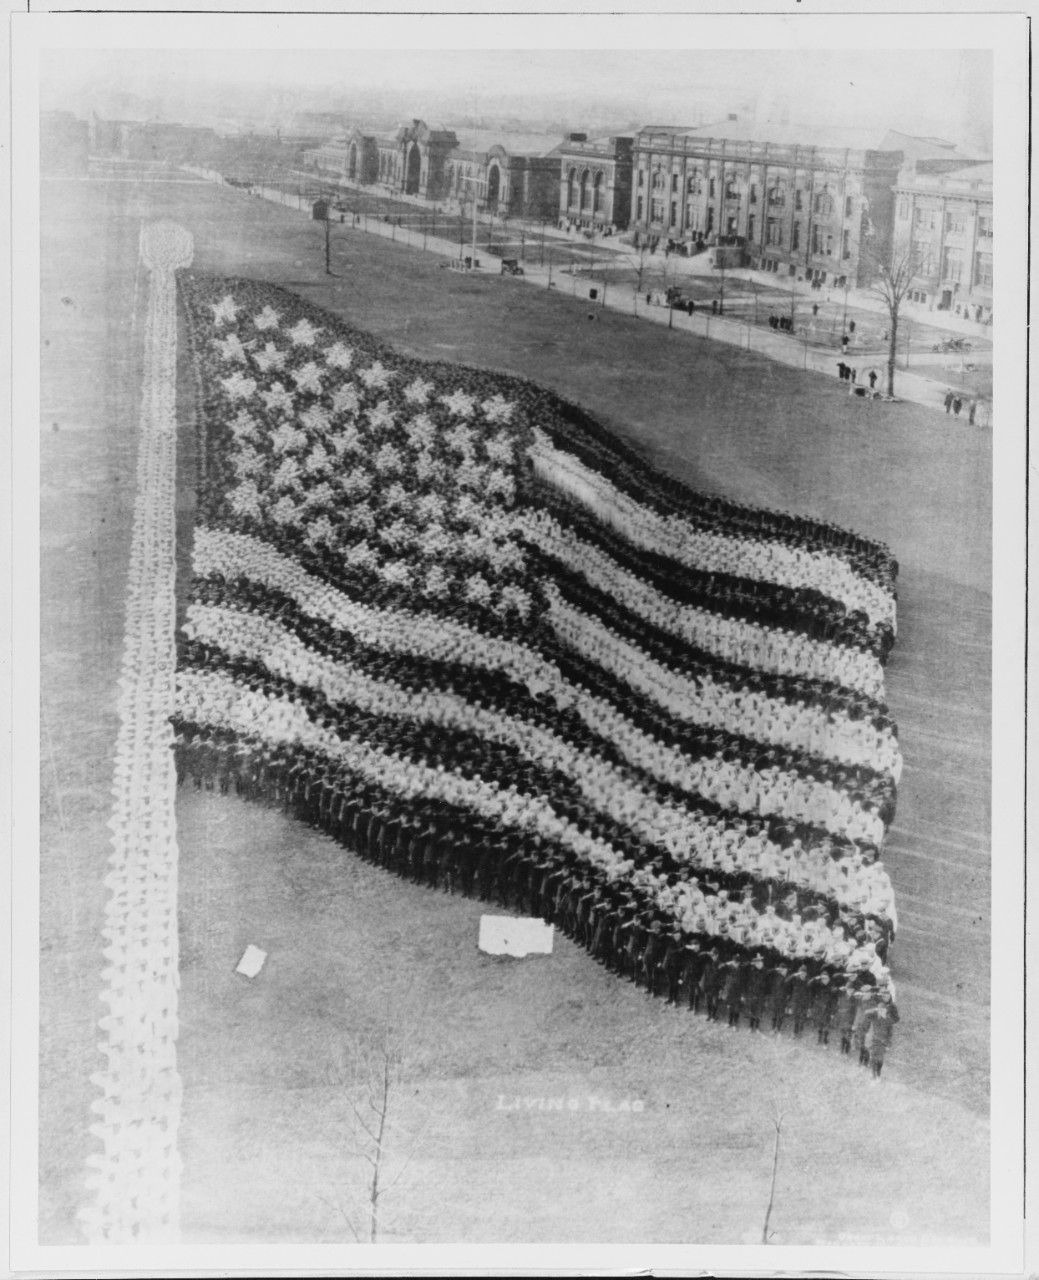 The living flag of 10,000 sailors, circa 1919.